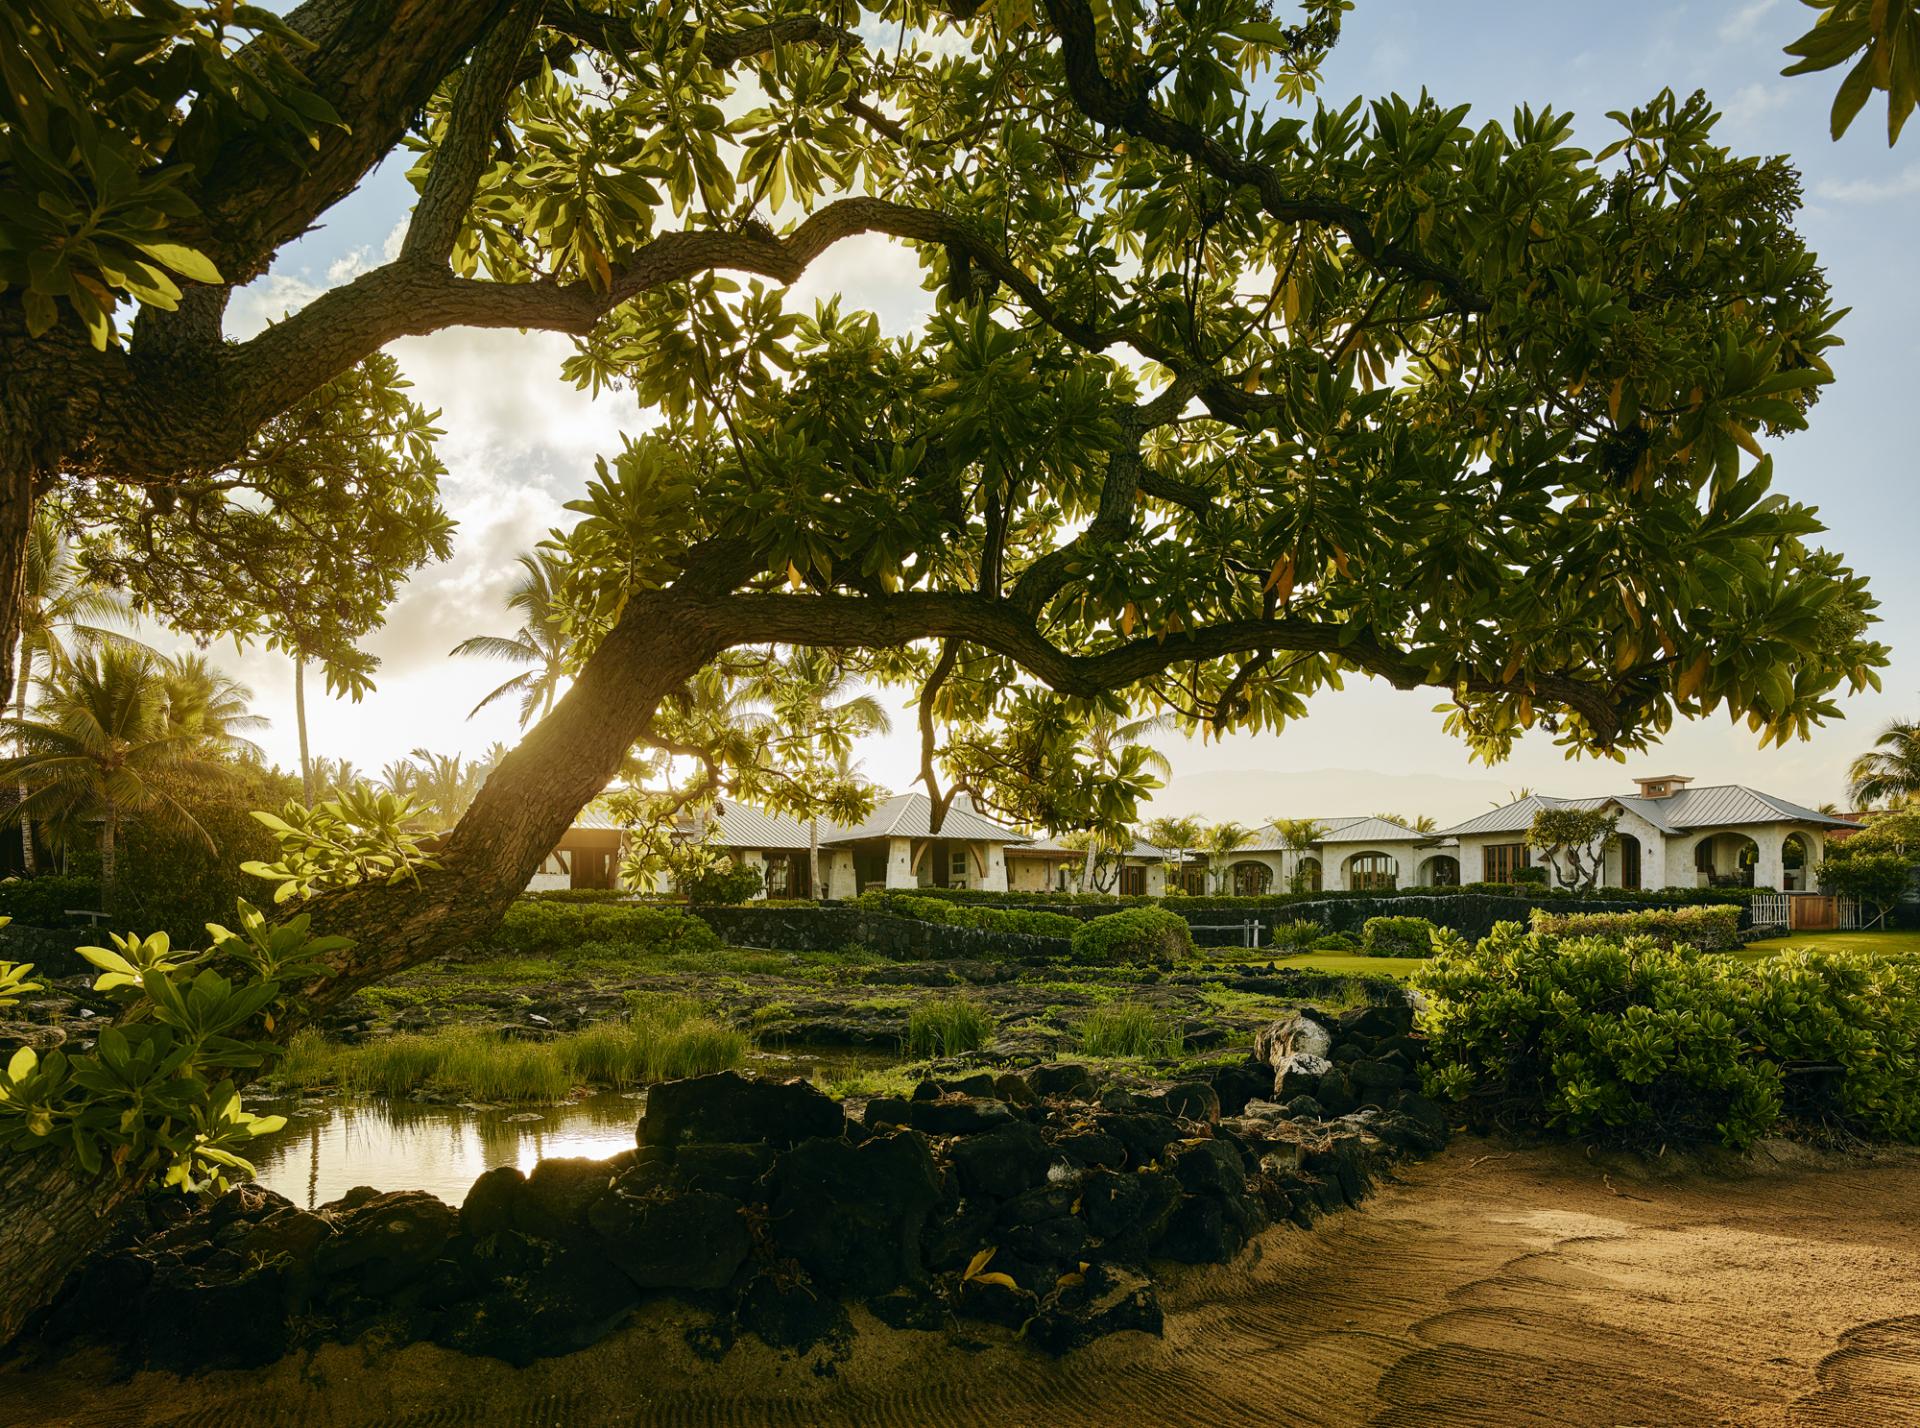 Walk Into A Rustic Yet Modern Home On Hawaii's North Kohala Coast 